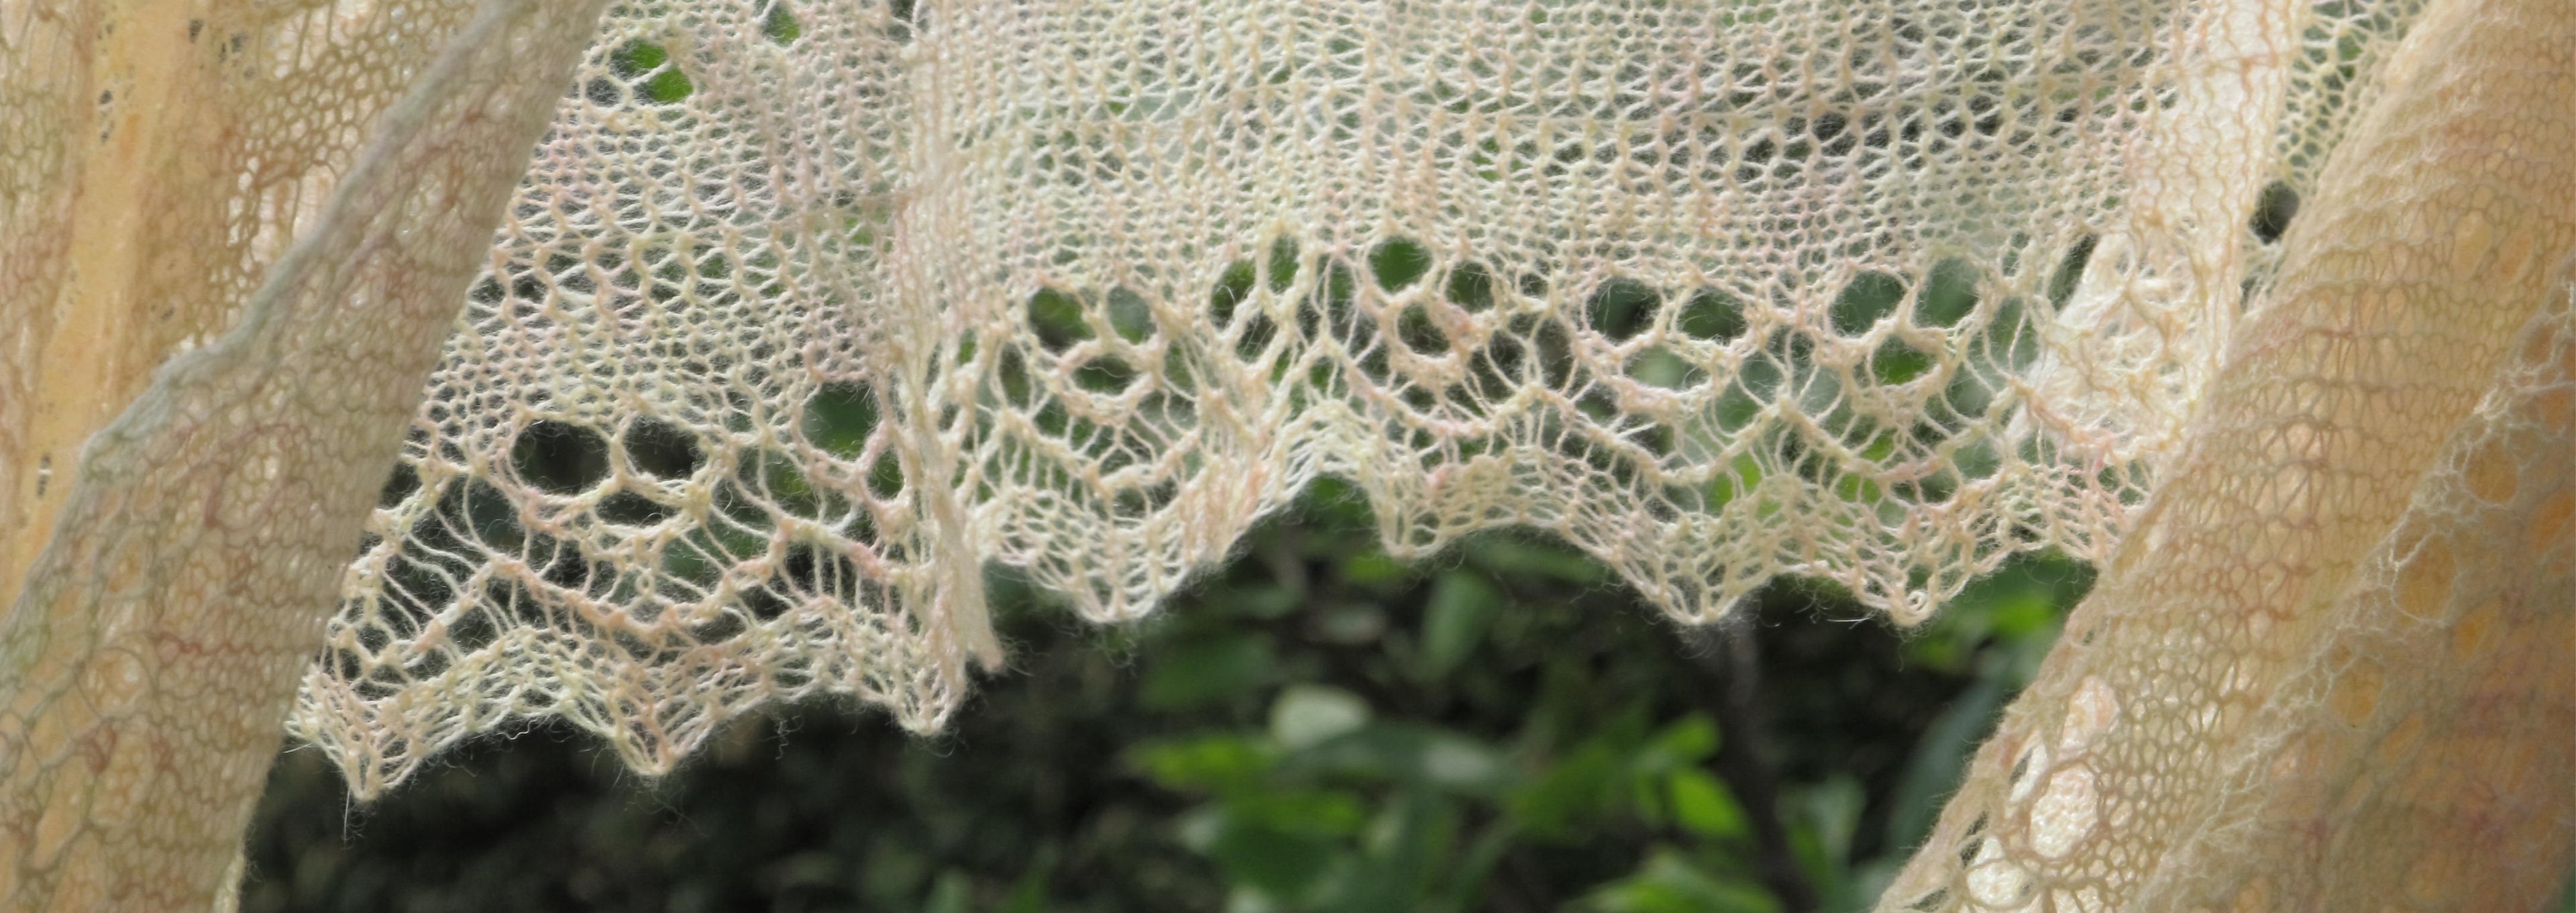 Triangular Crochet Cotton Lace Trim Edge New Arrival Lace - China